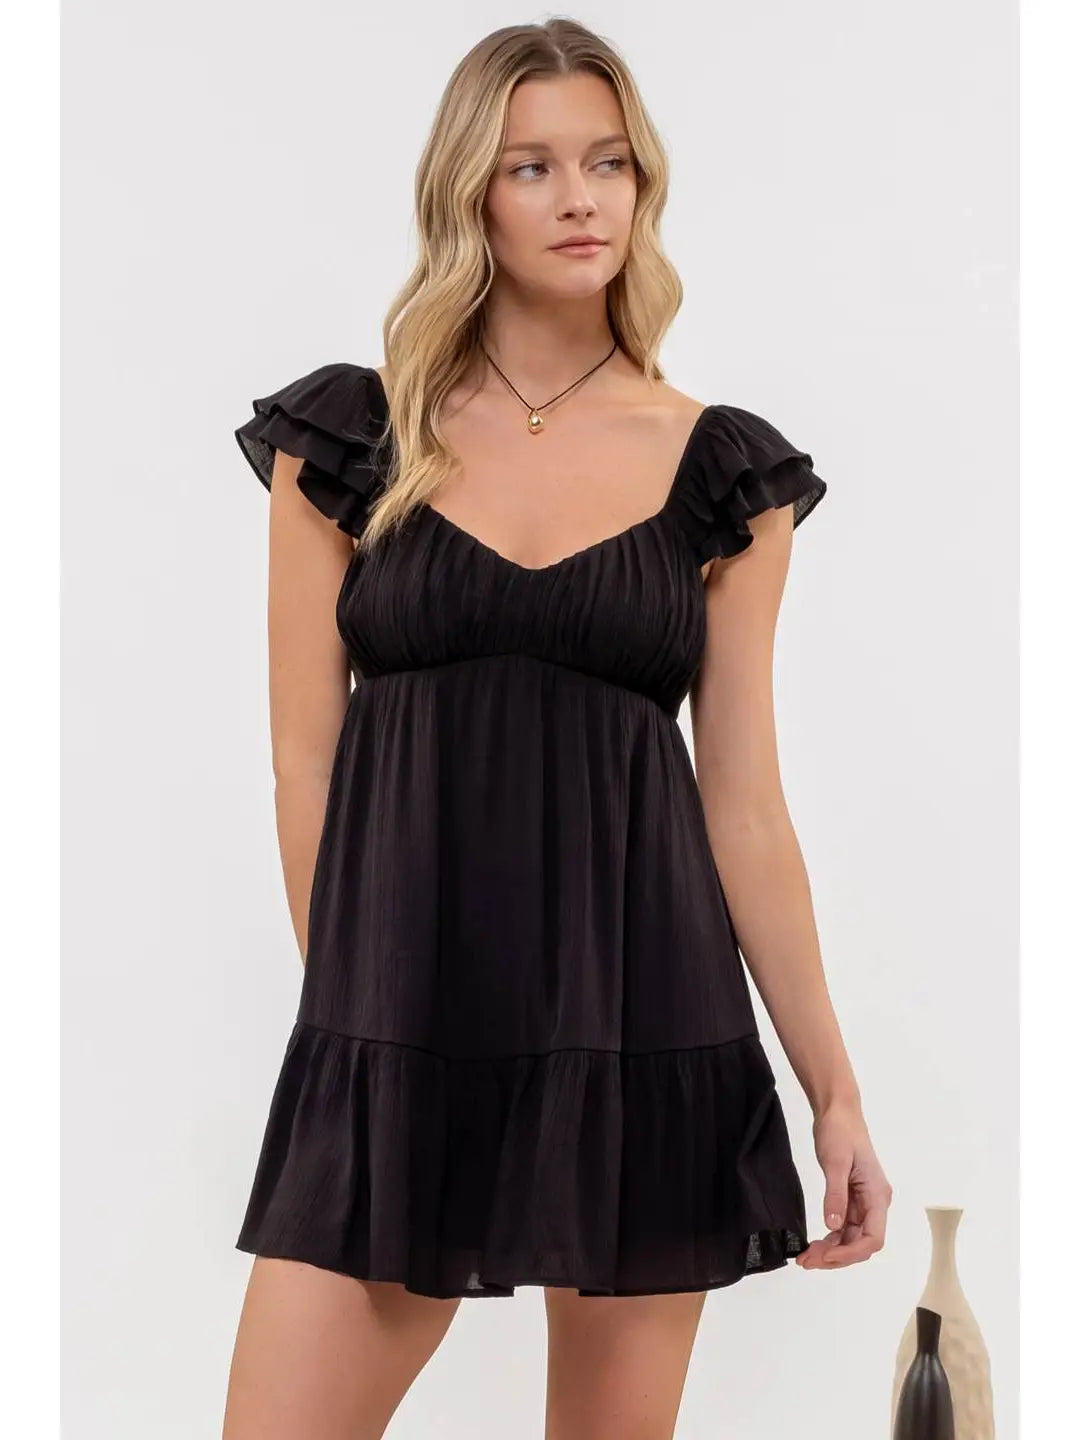 Sweetheart in Black Mini Dress